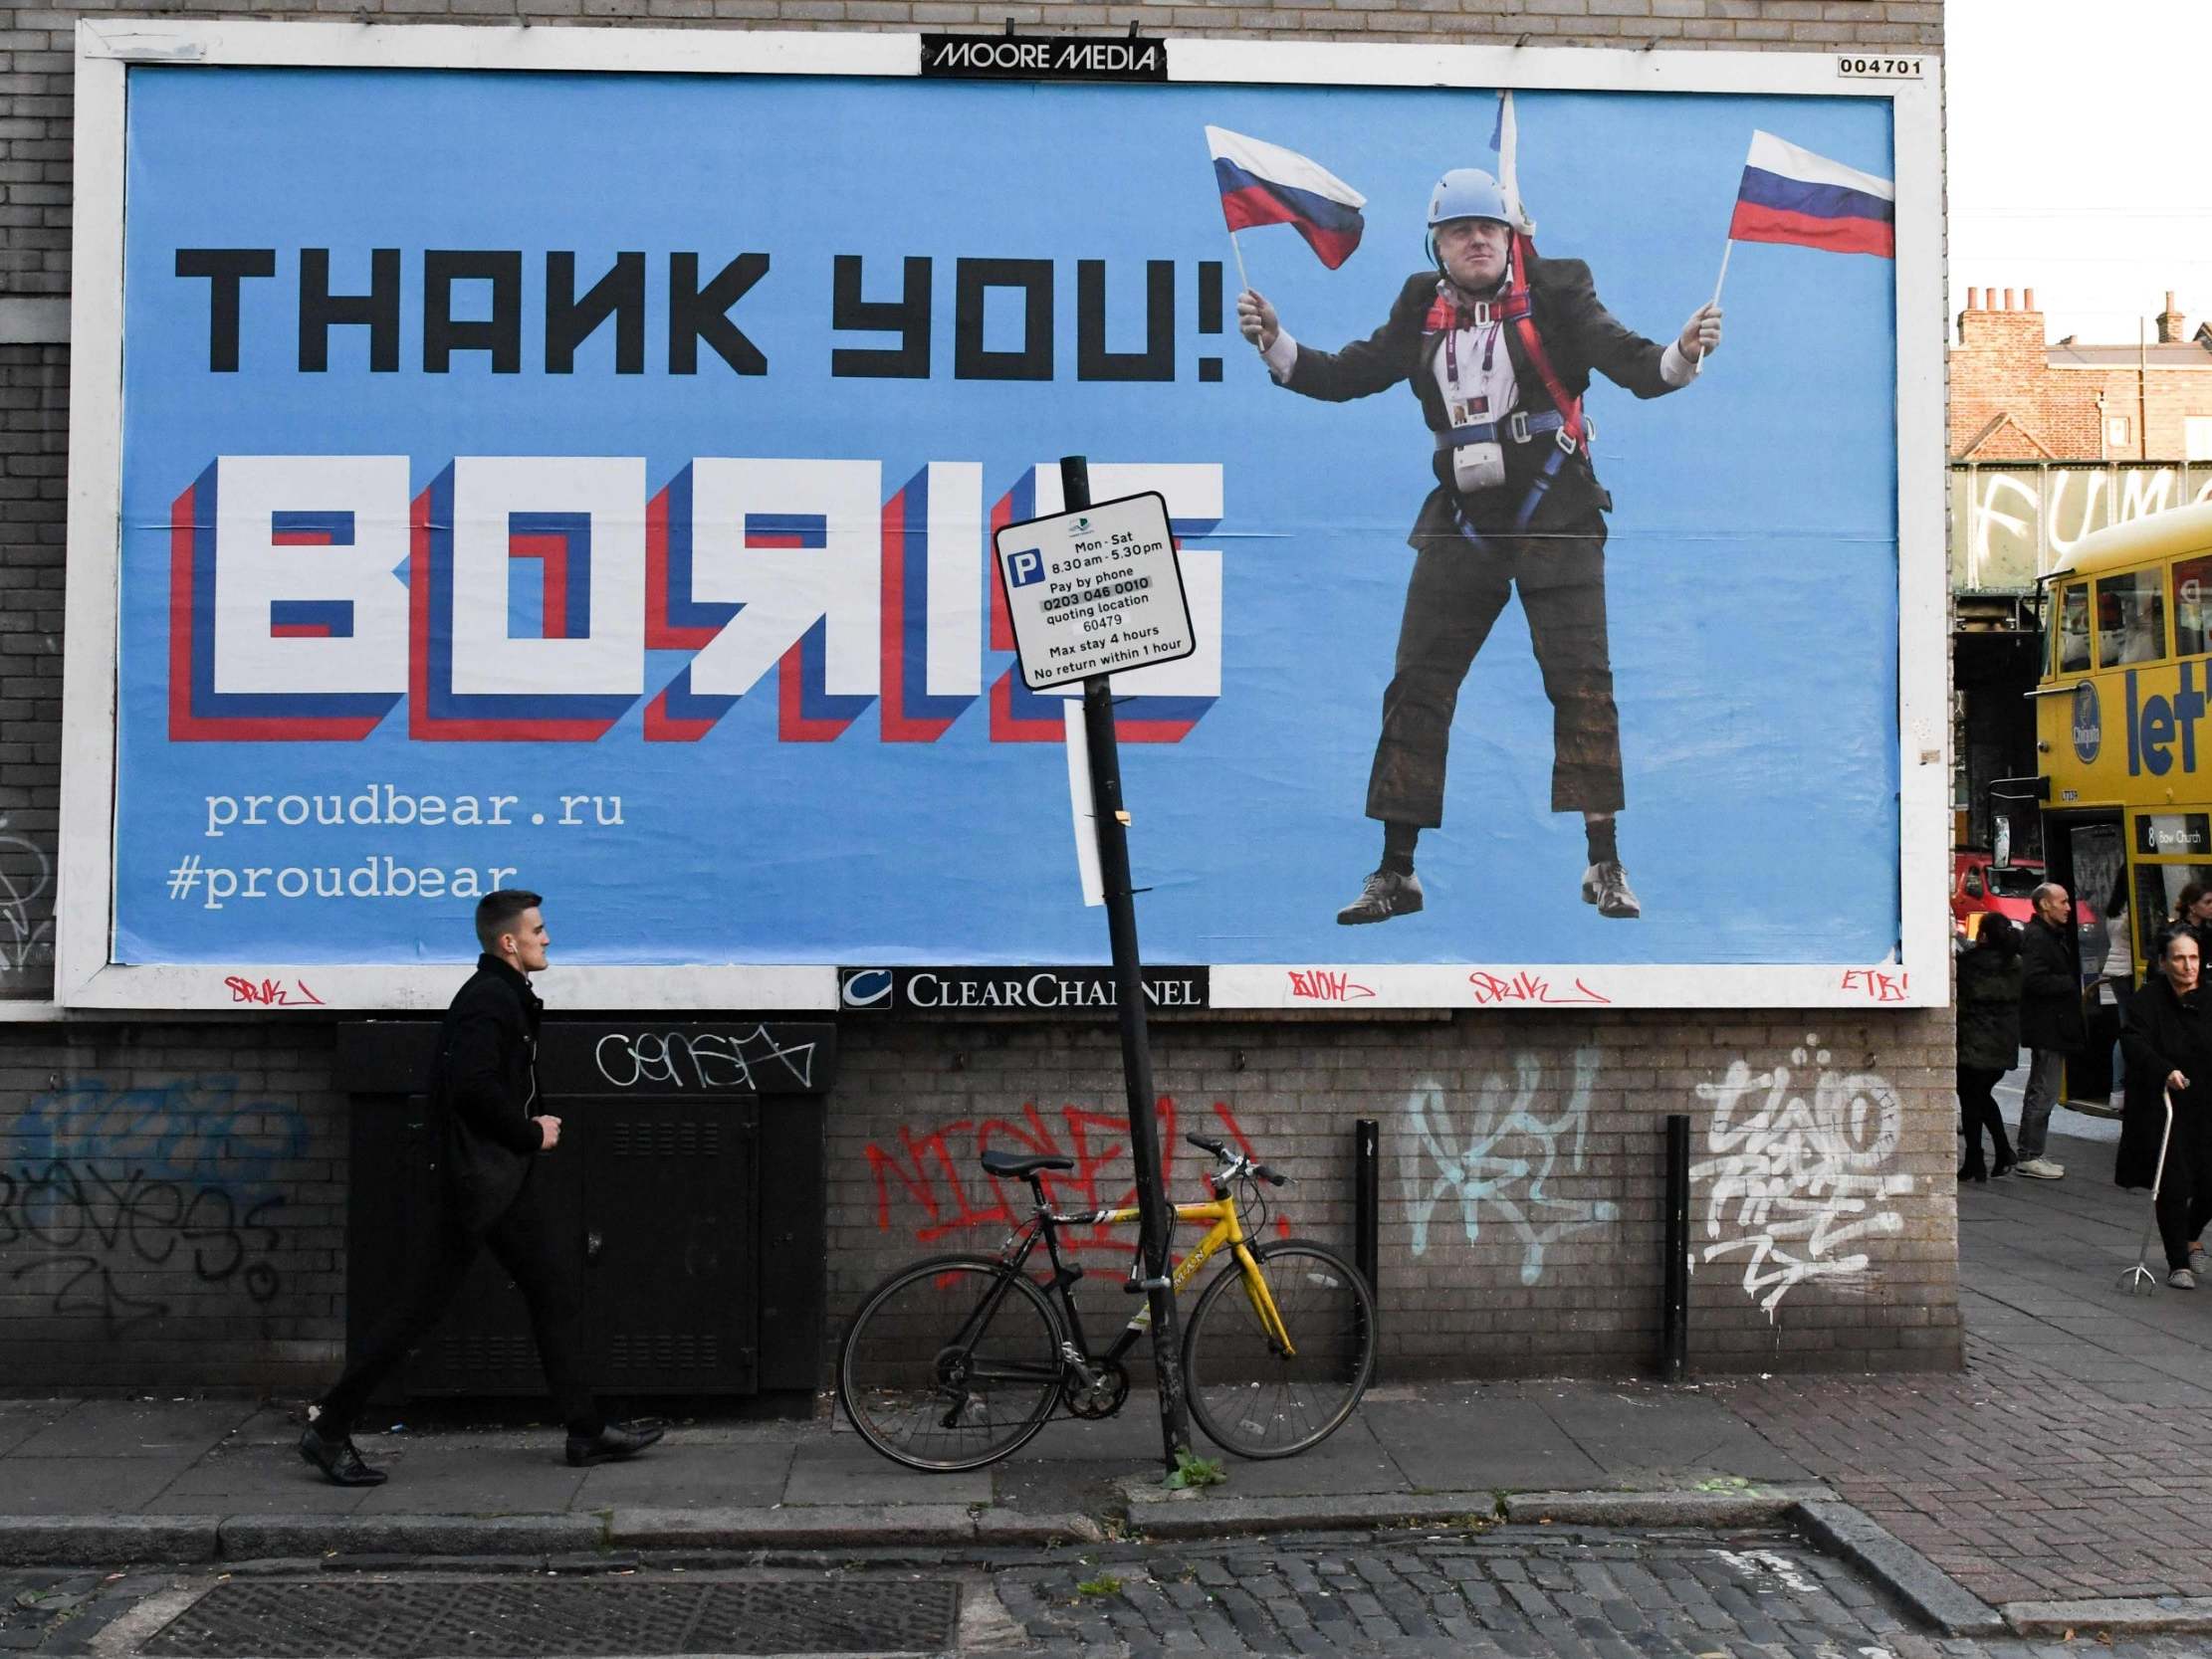 A Brexit-themed billboard in east London